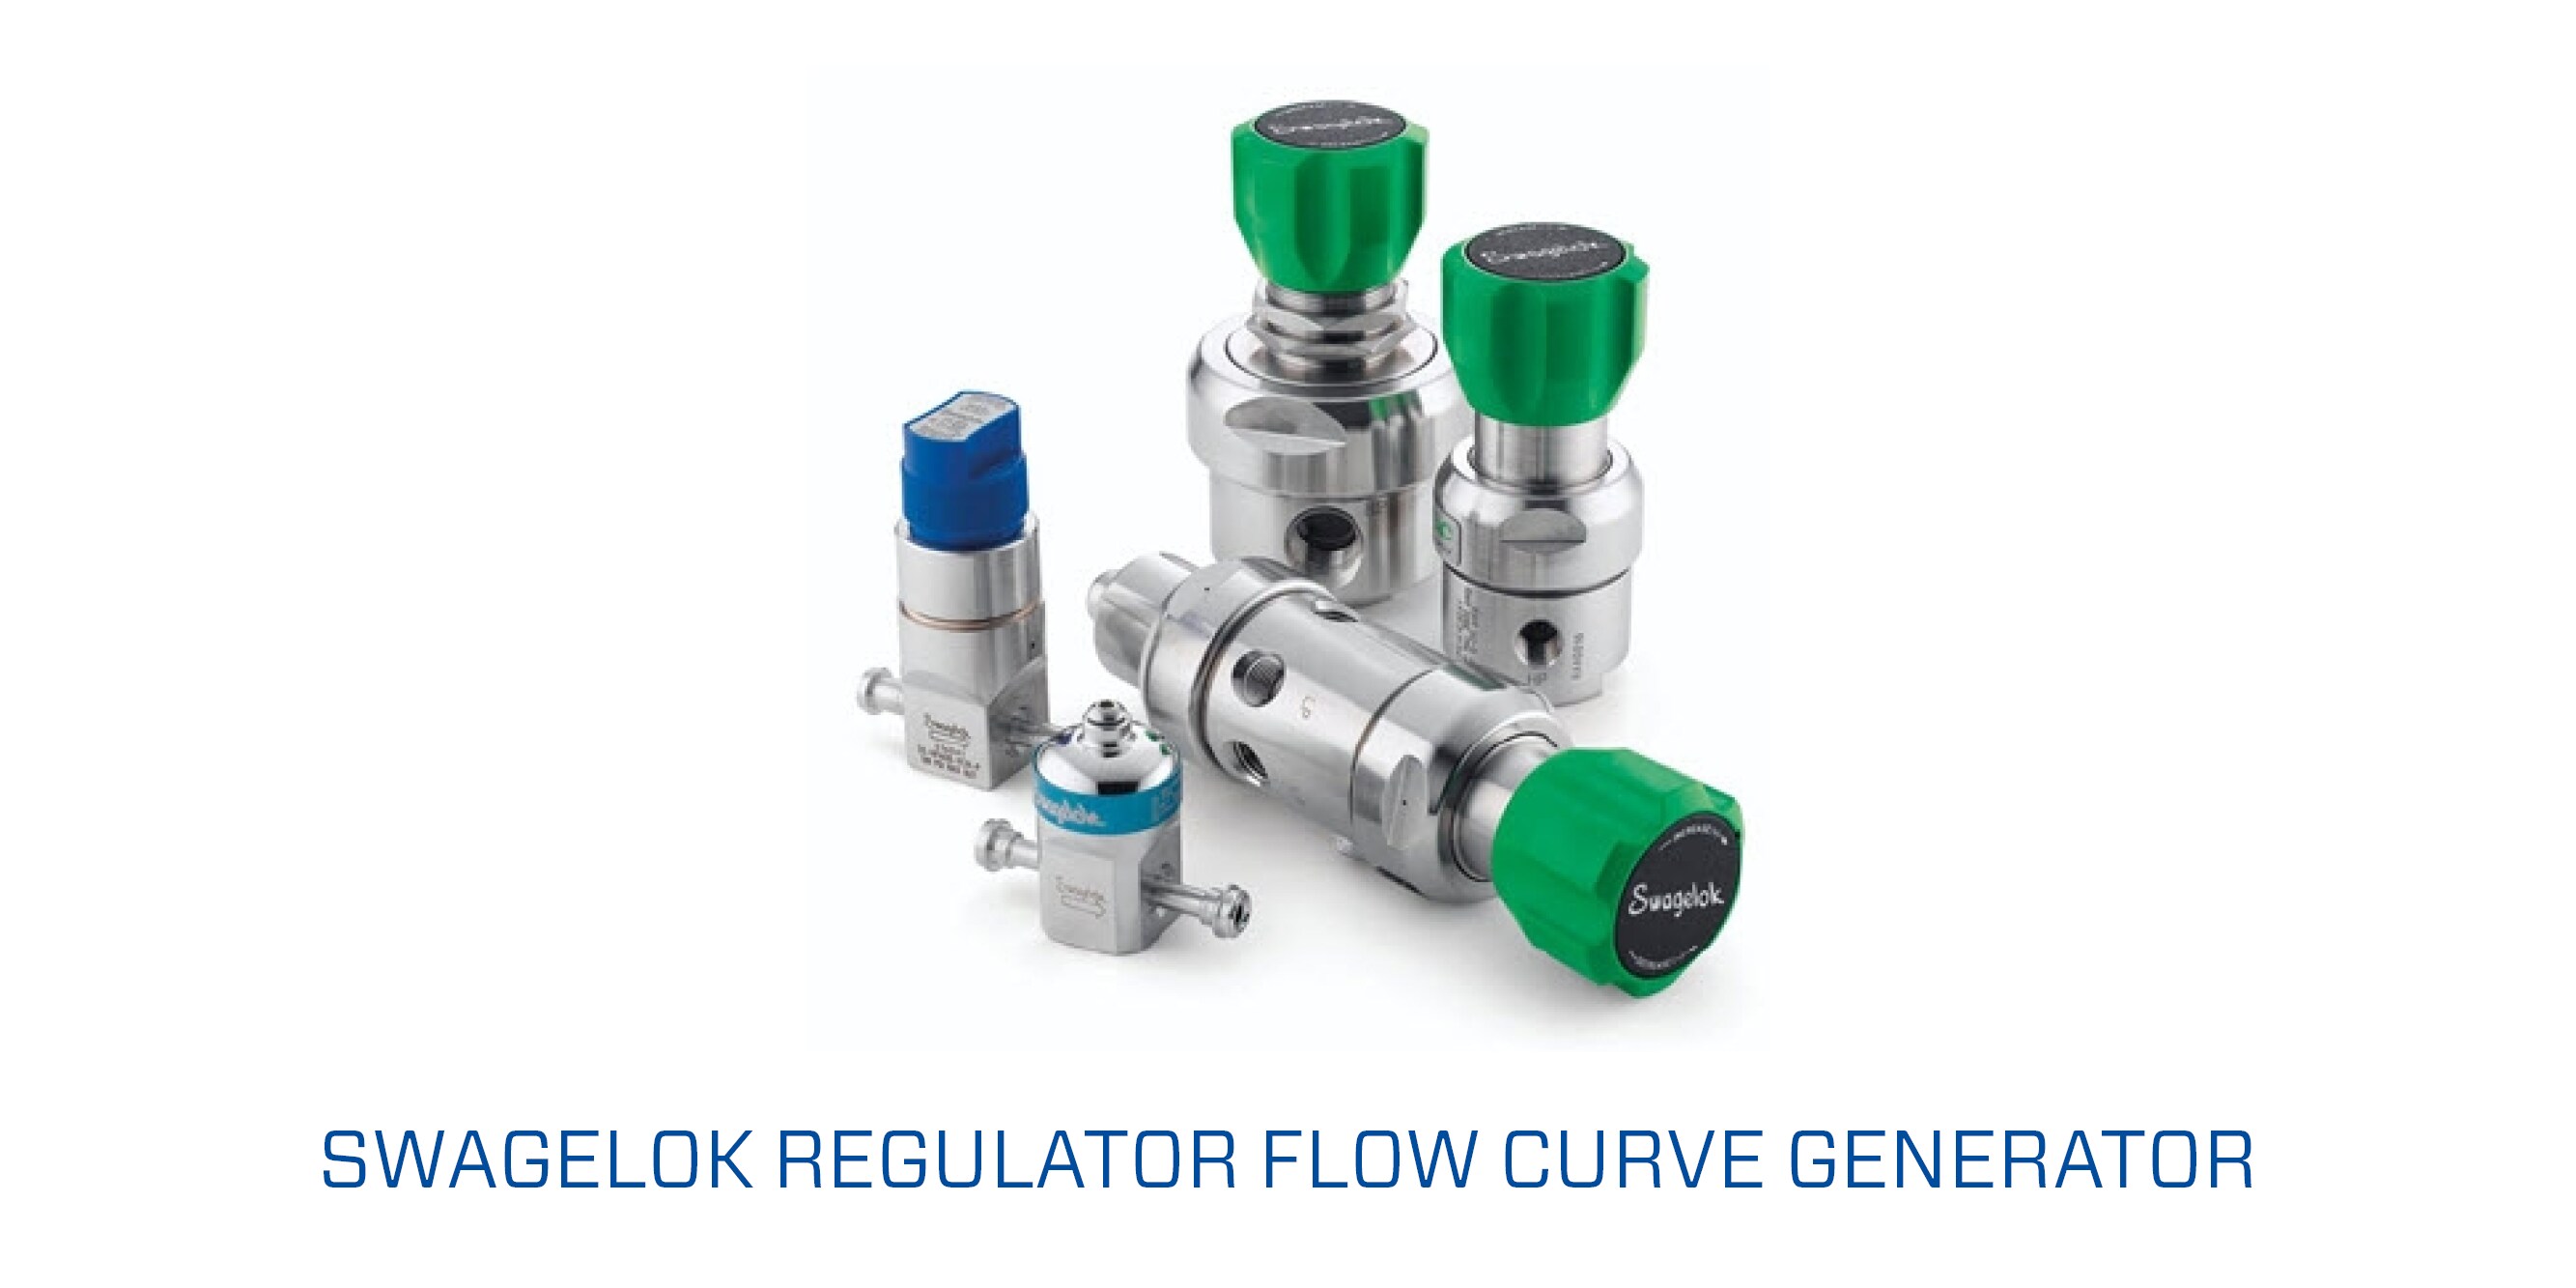 Regulator Flow Curve Generator